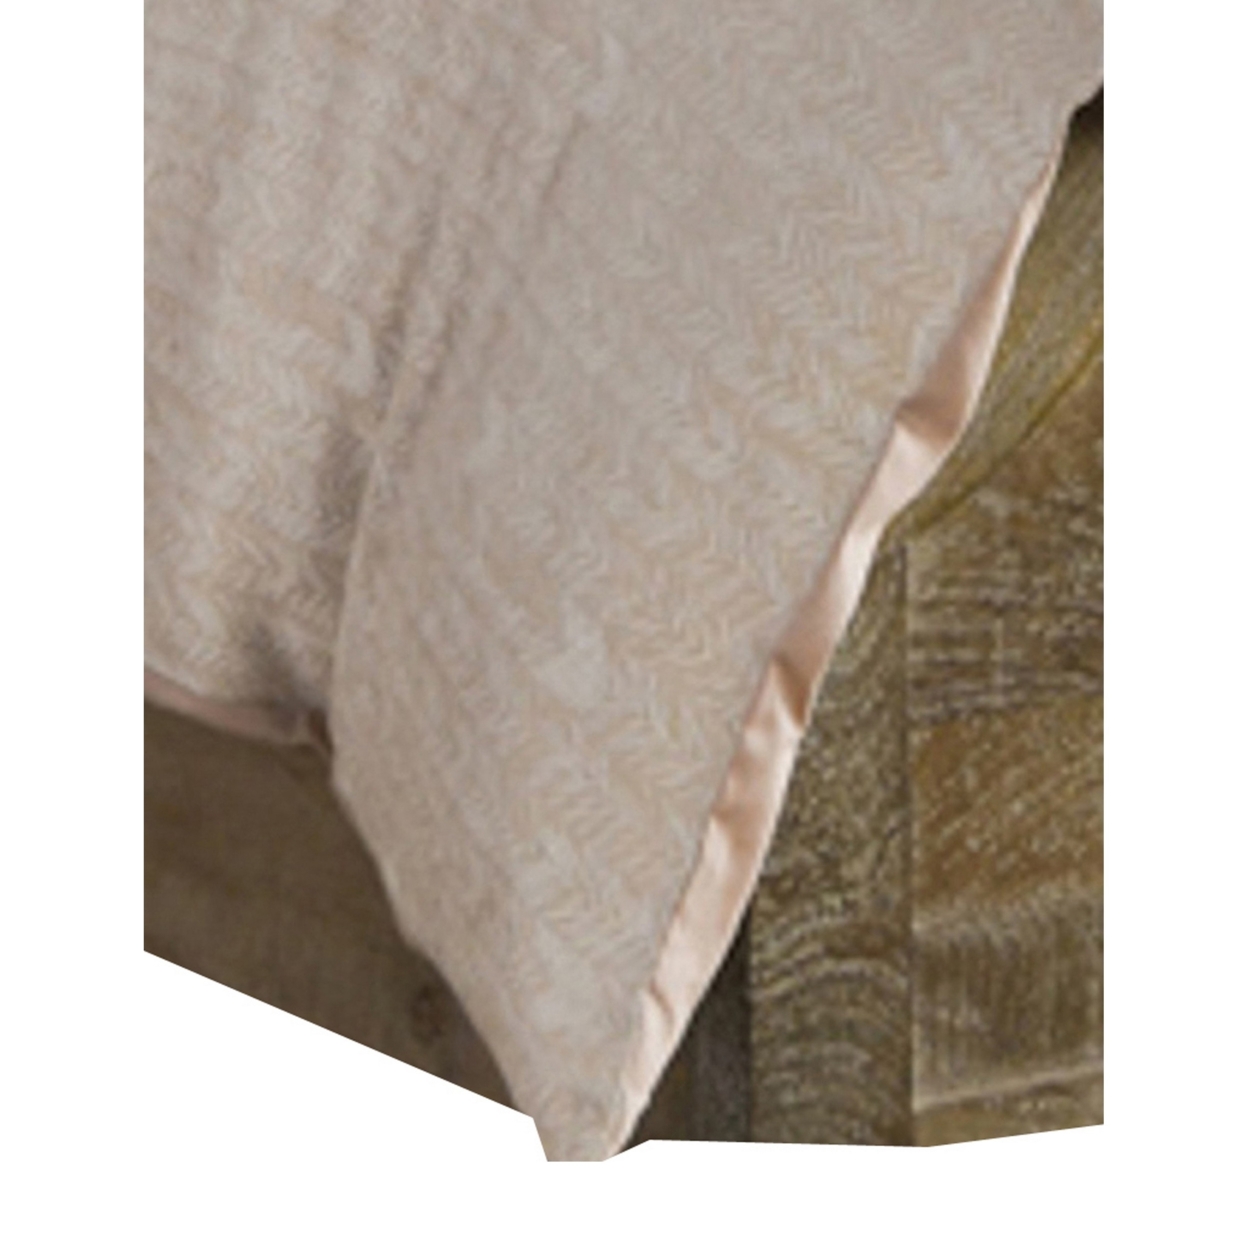 Zima King Size Cotton Duvet Cover, Woven French Herringbone Pattern, Beige- Saltoro Sherpi